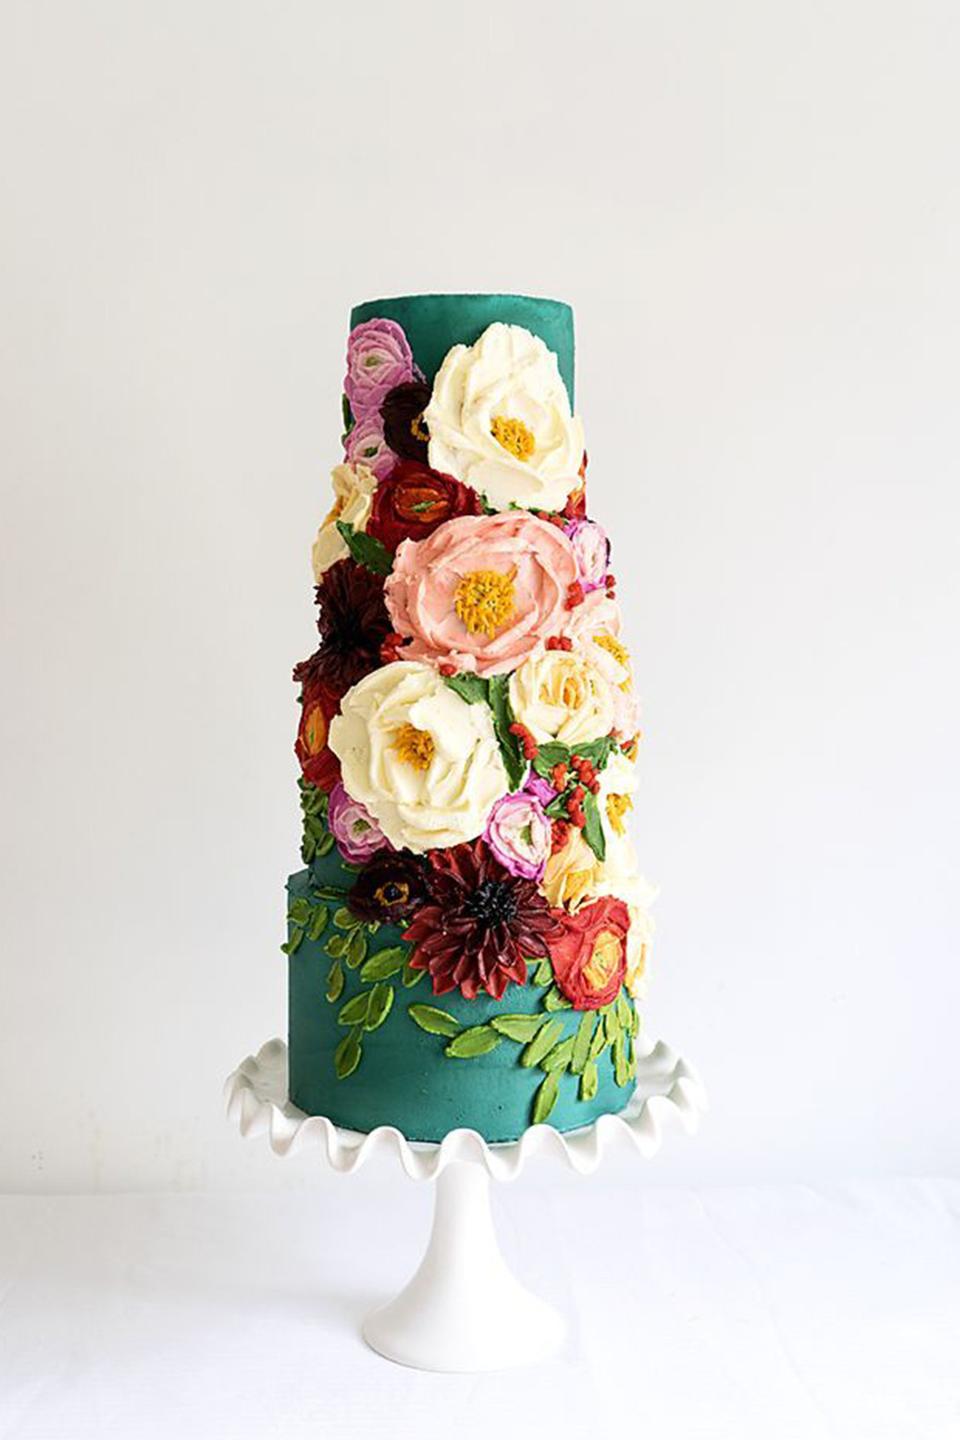 71 Incredible Wedding Cakes You Need at Your Wedding - hitched.co.uk ...